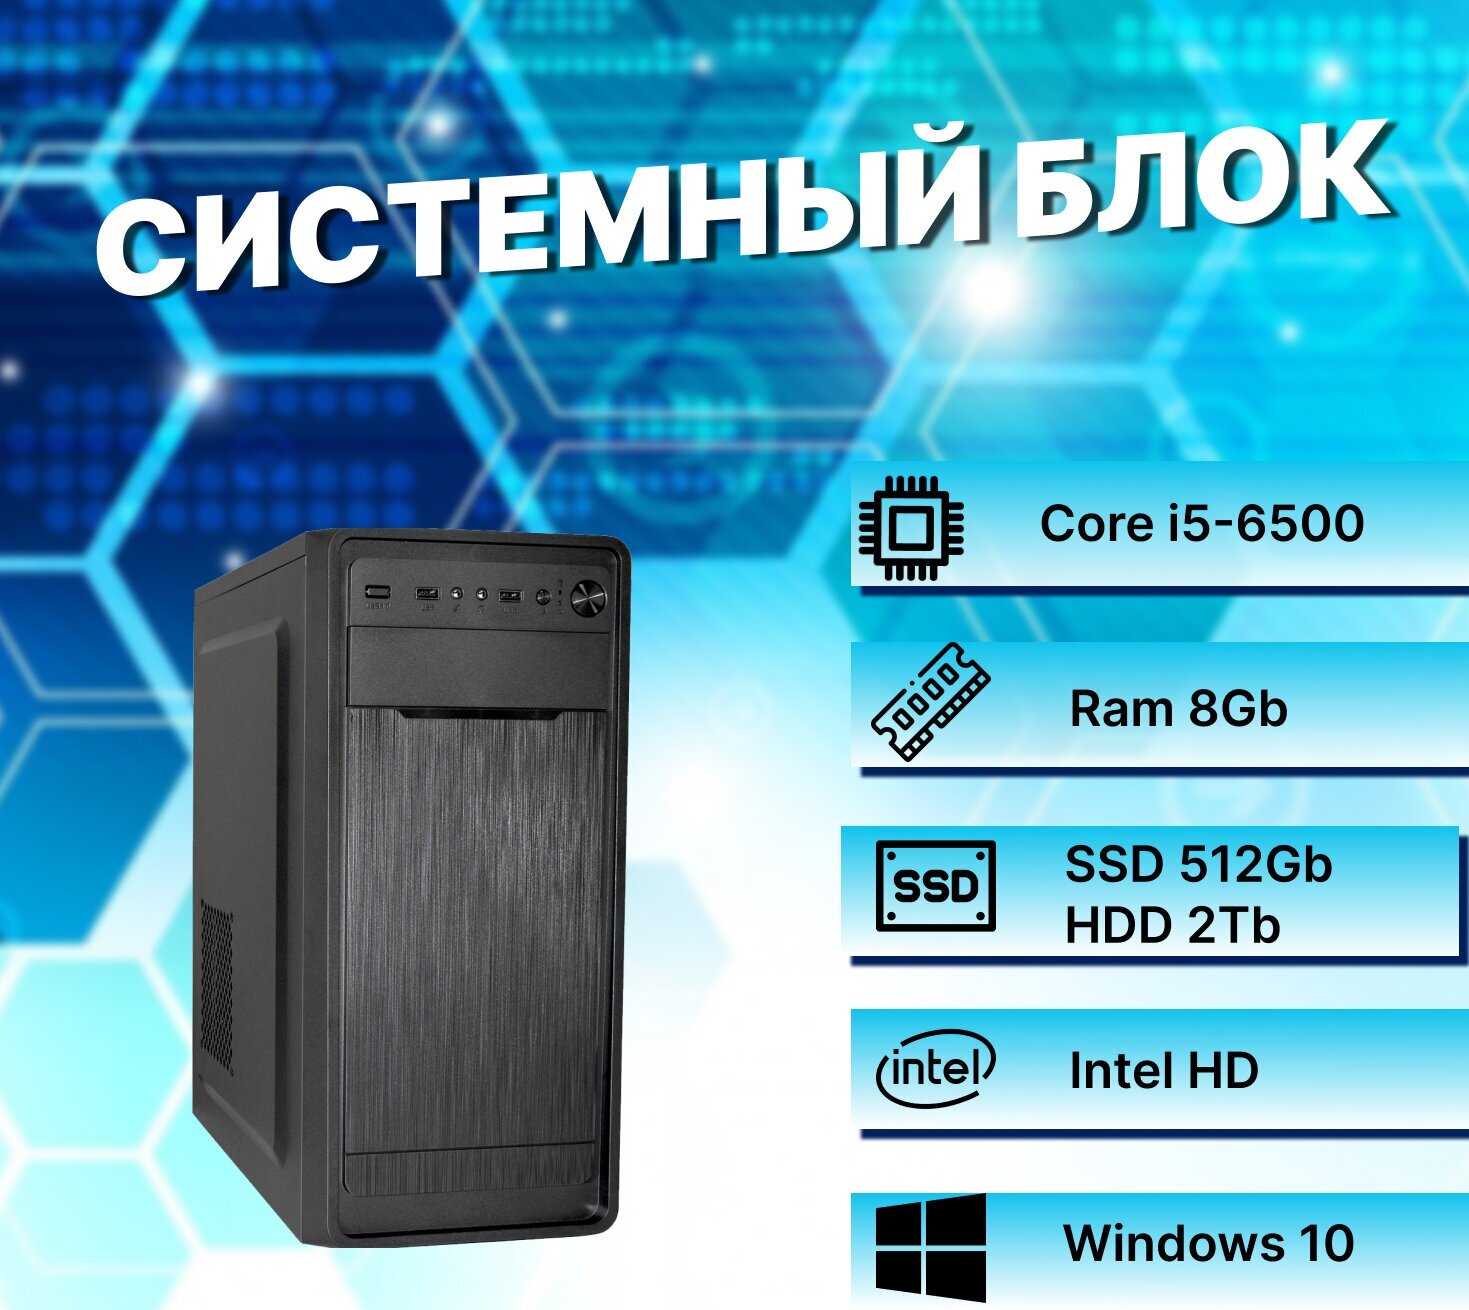 Системный блок Intel Core I5-6500 (3.2ГГц)/ RAM 8Gb/ SSD 512Gb/ HDD 2Tb/ Intel HD/ Windows 10 Pro